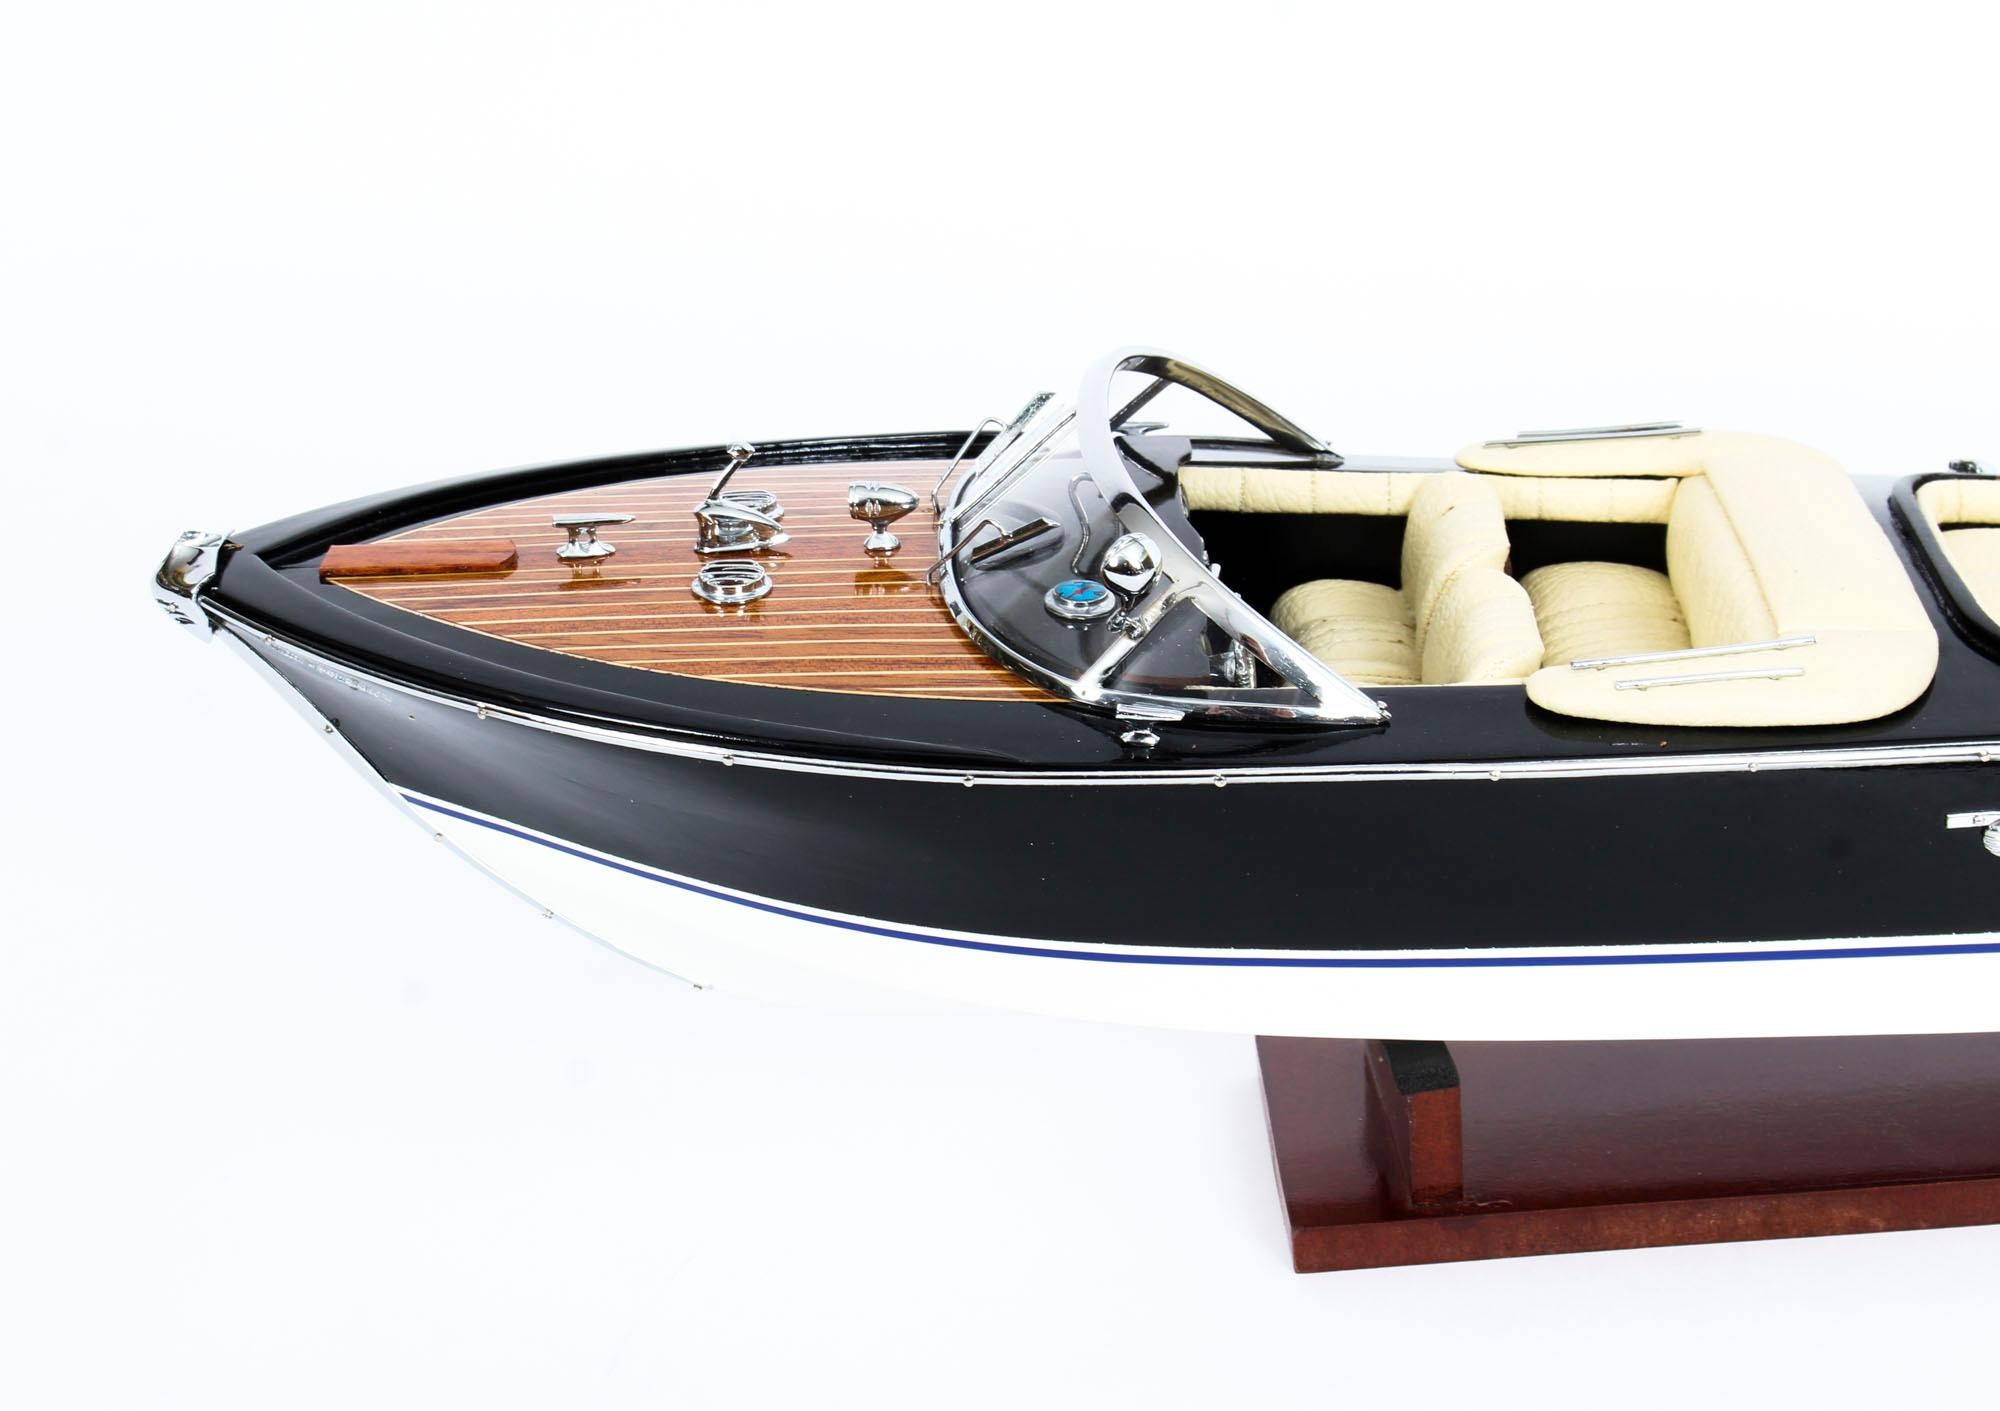 Vintage Model of a Riva Aquarama Speedboat with Cream Interior, 20th Century 6